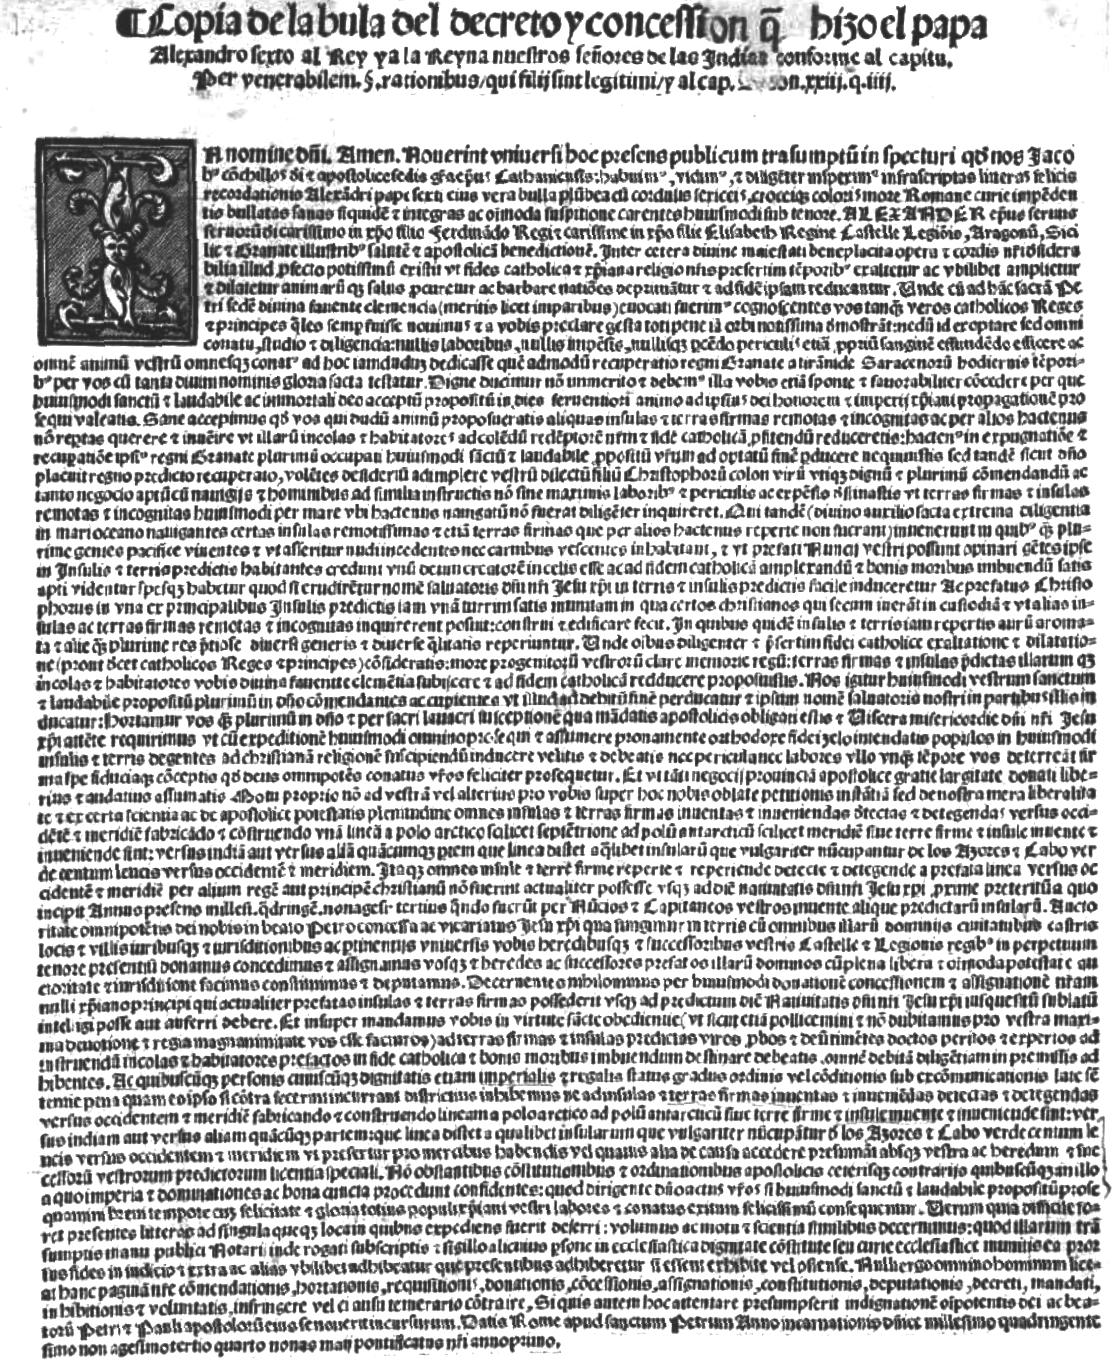 Bull-Inter-Caetera Doctrine of Discovery - Pope Alexander VI